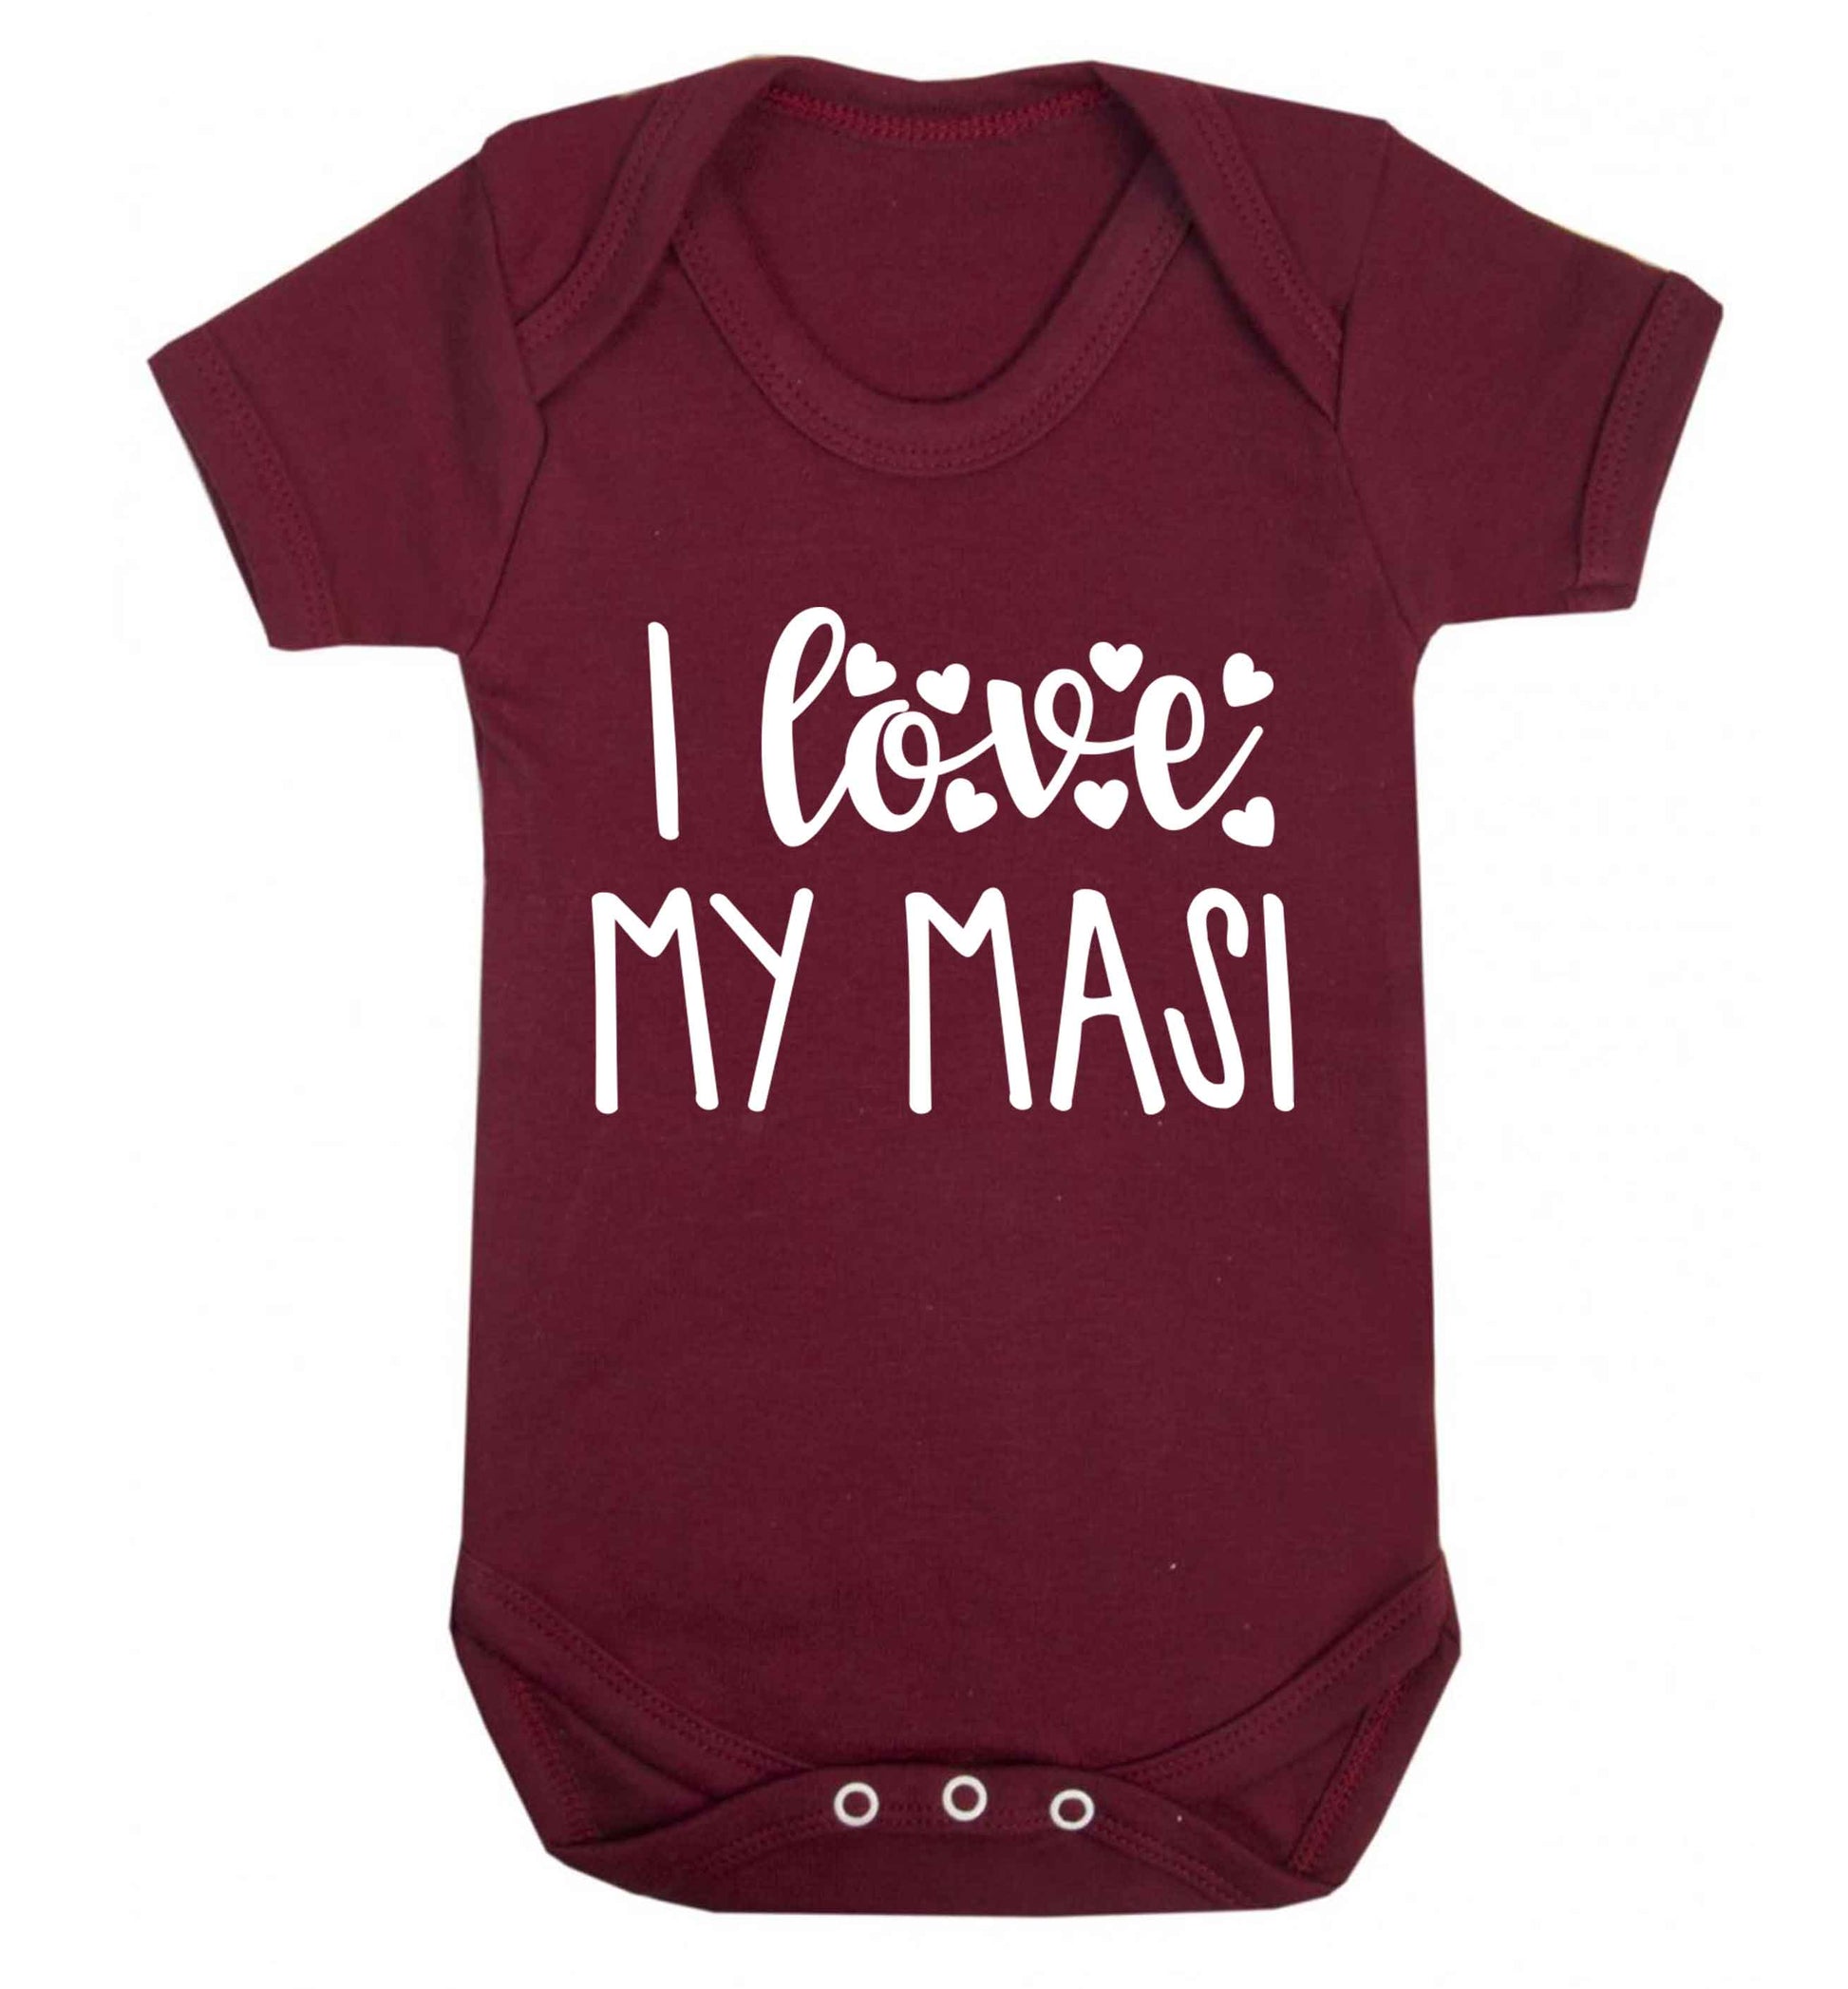 I love my masi Baby Vest maroon 18-24 months